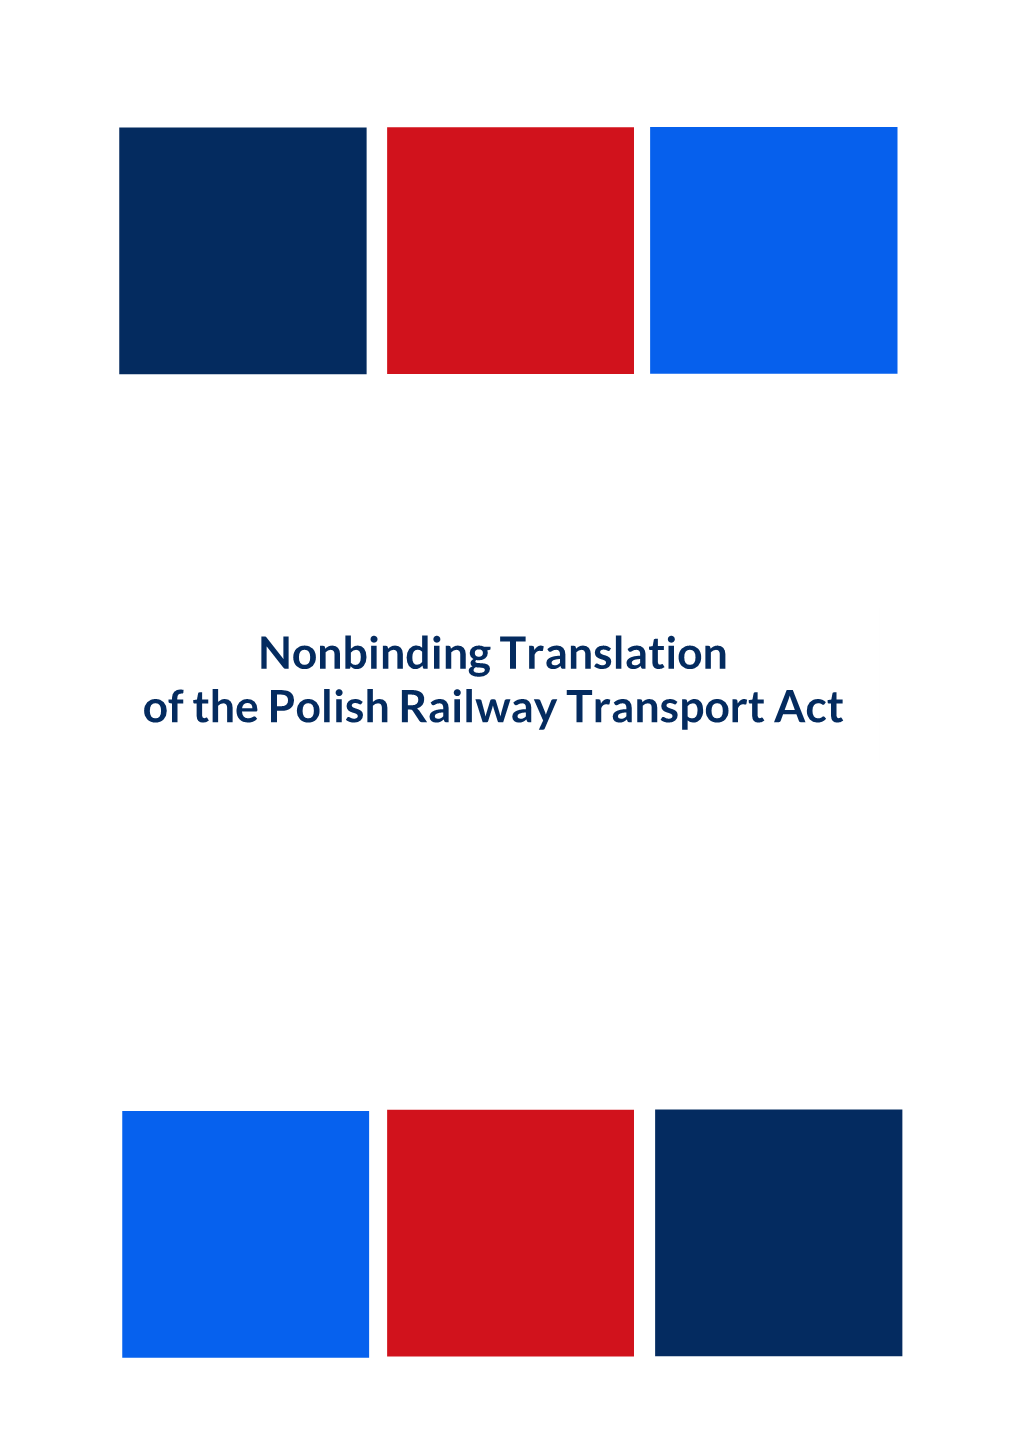 Nonbinding Translation of the Polish Railway Transport Act